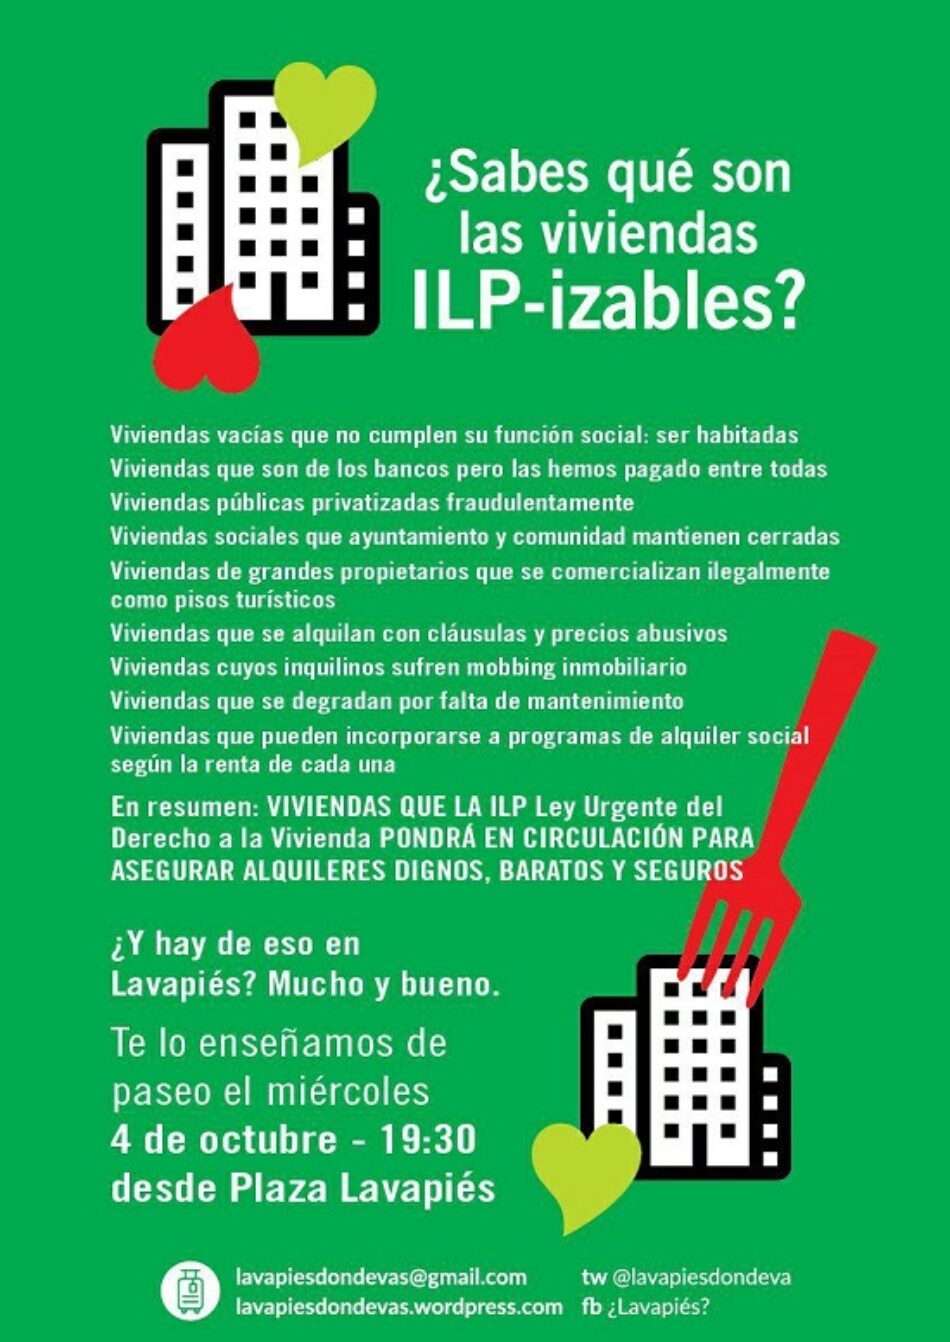 ¿Sabes lo que son las viviendas ILP-izables? Visita guiada por Lavapiés